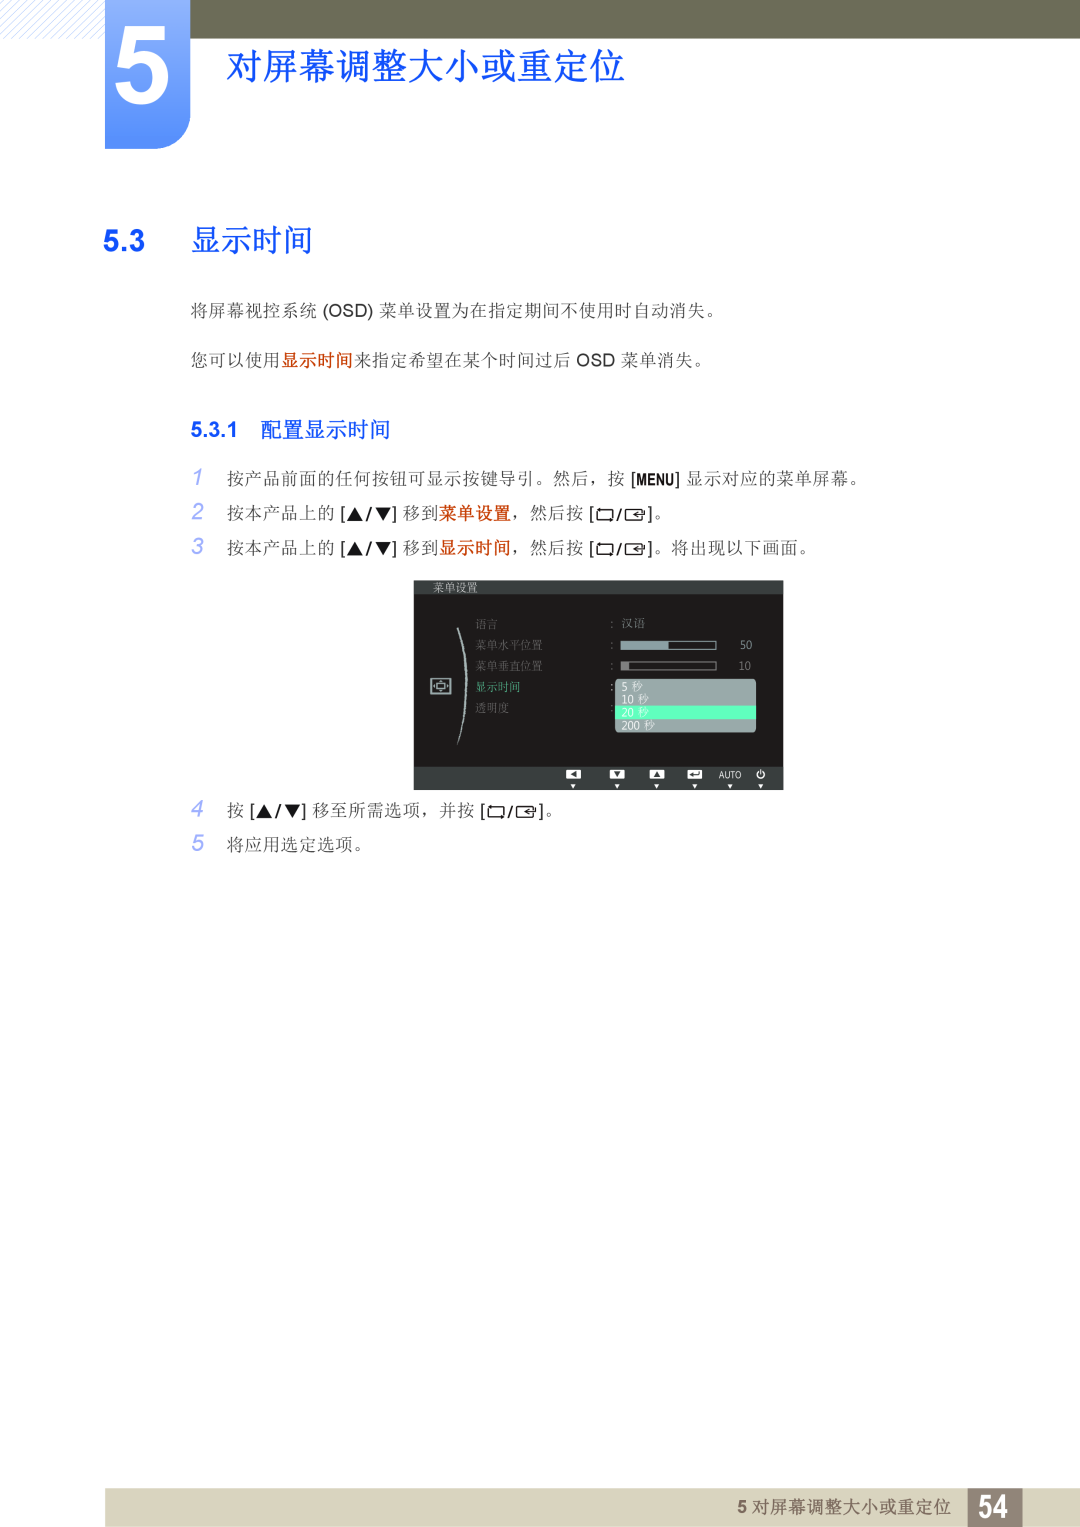 Samsung LS24C45KBW/EN 5.3 显示时间, 5.3.1 配置显示时间, 将屏幕视控系统 Osd 菜单设置为在指定期间不使用时自动消失。 您可以使用显示时间来指定希望在某个时间过后 Osd 菜单消失。, 汉语, 秒 